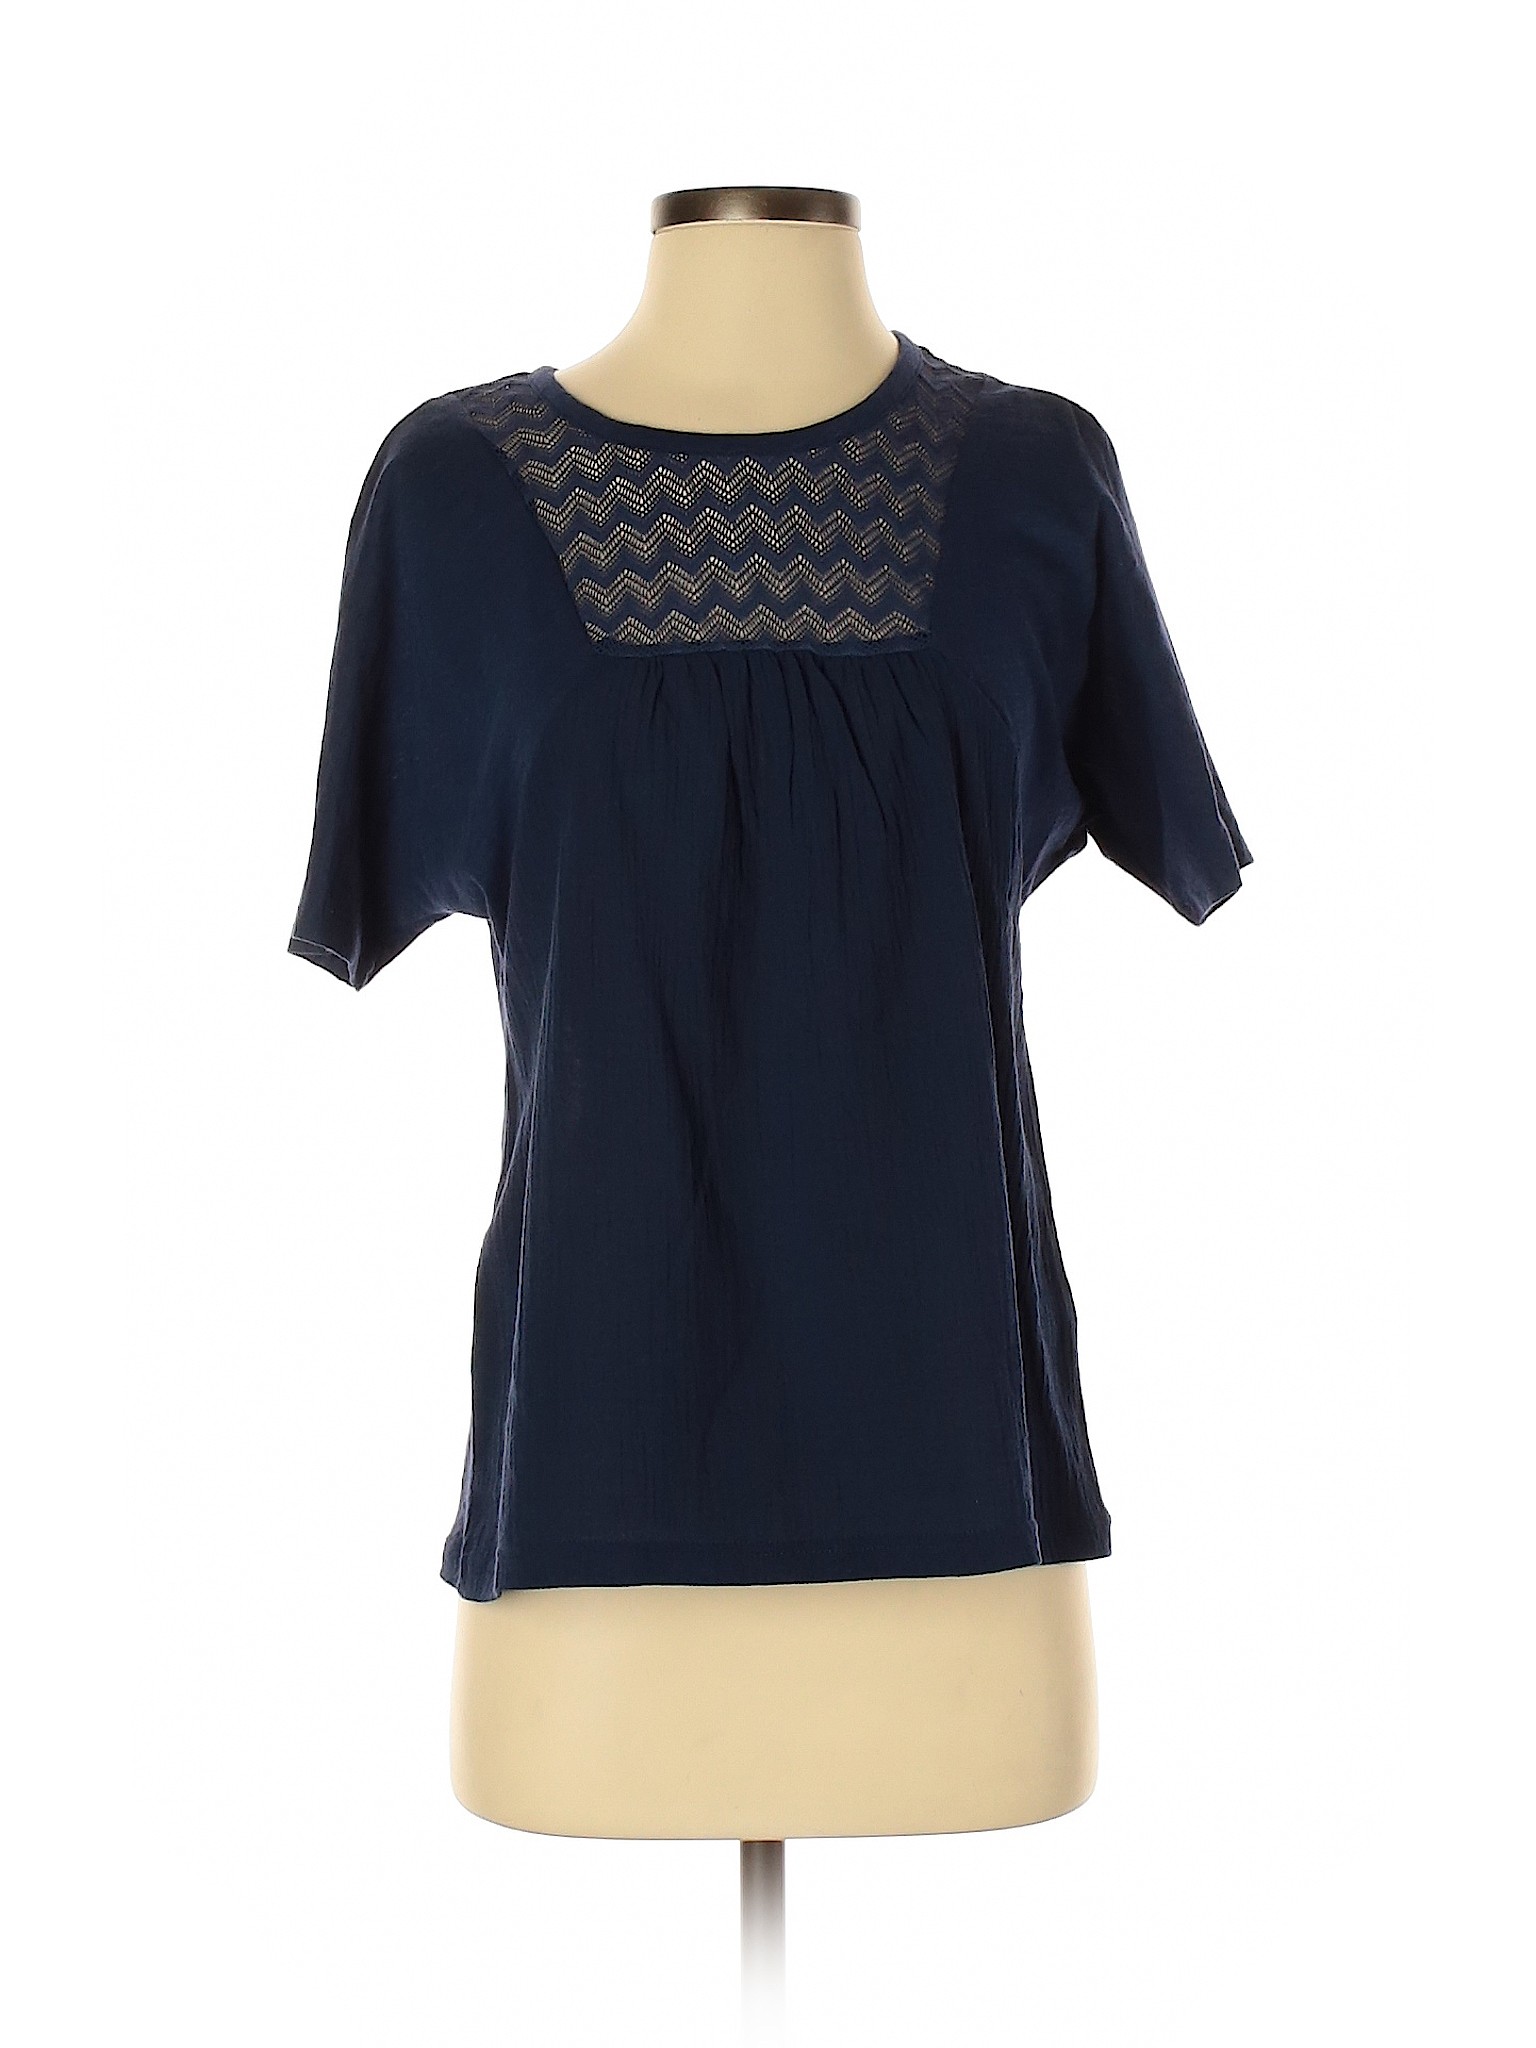 Madewell Women Blue Short Sleeve Blouse XS | eBay